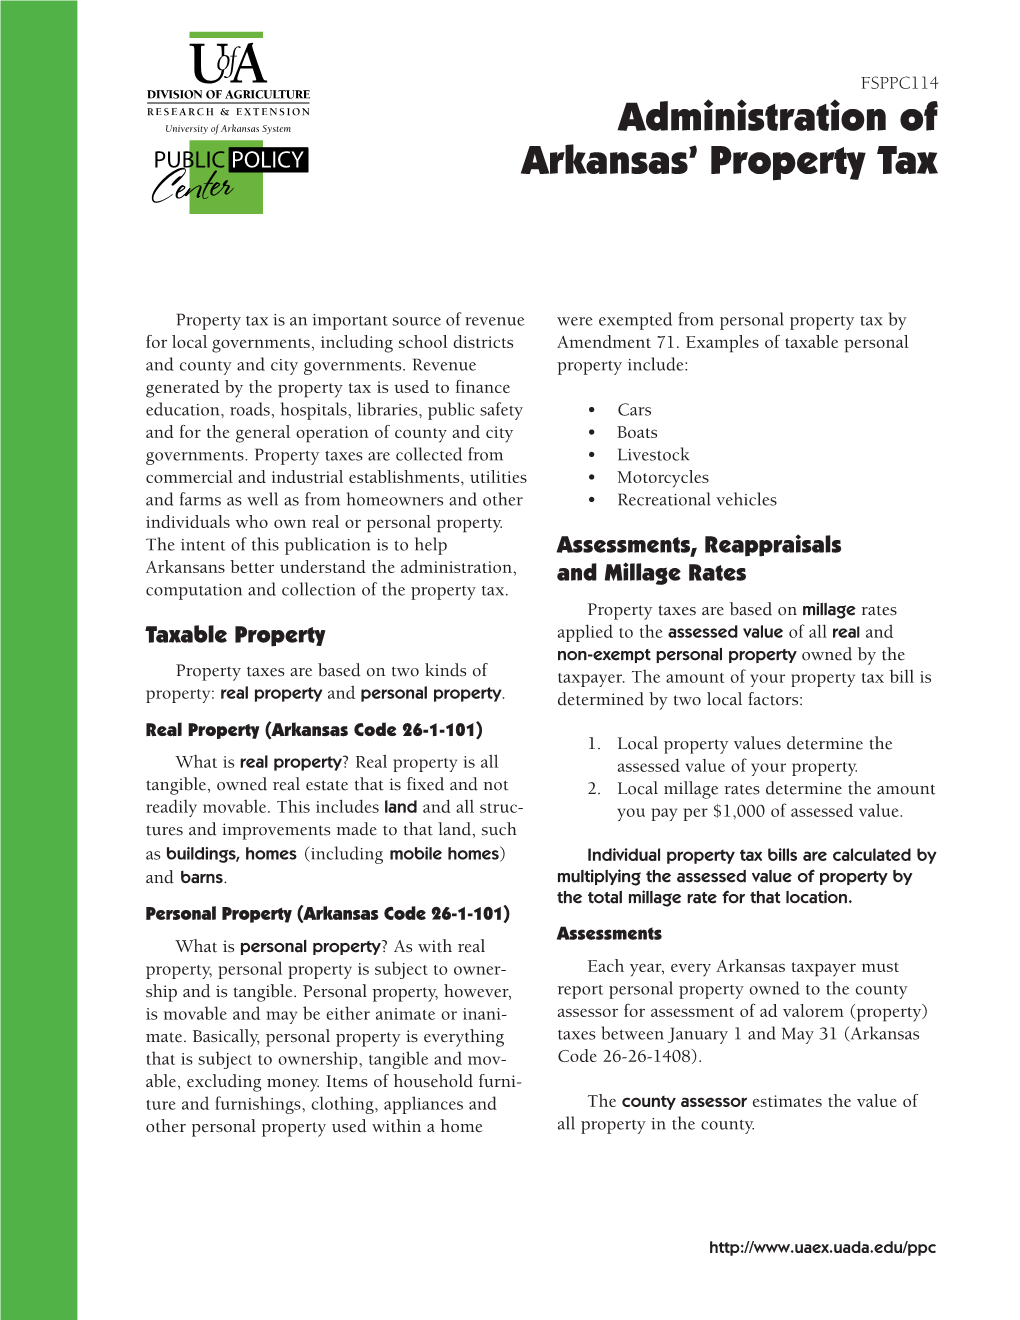 Administration of Arkansas' Property